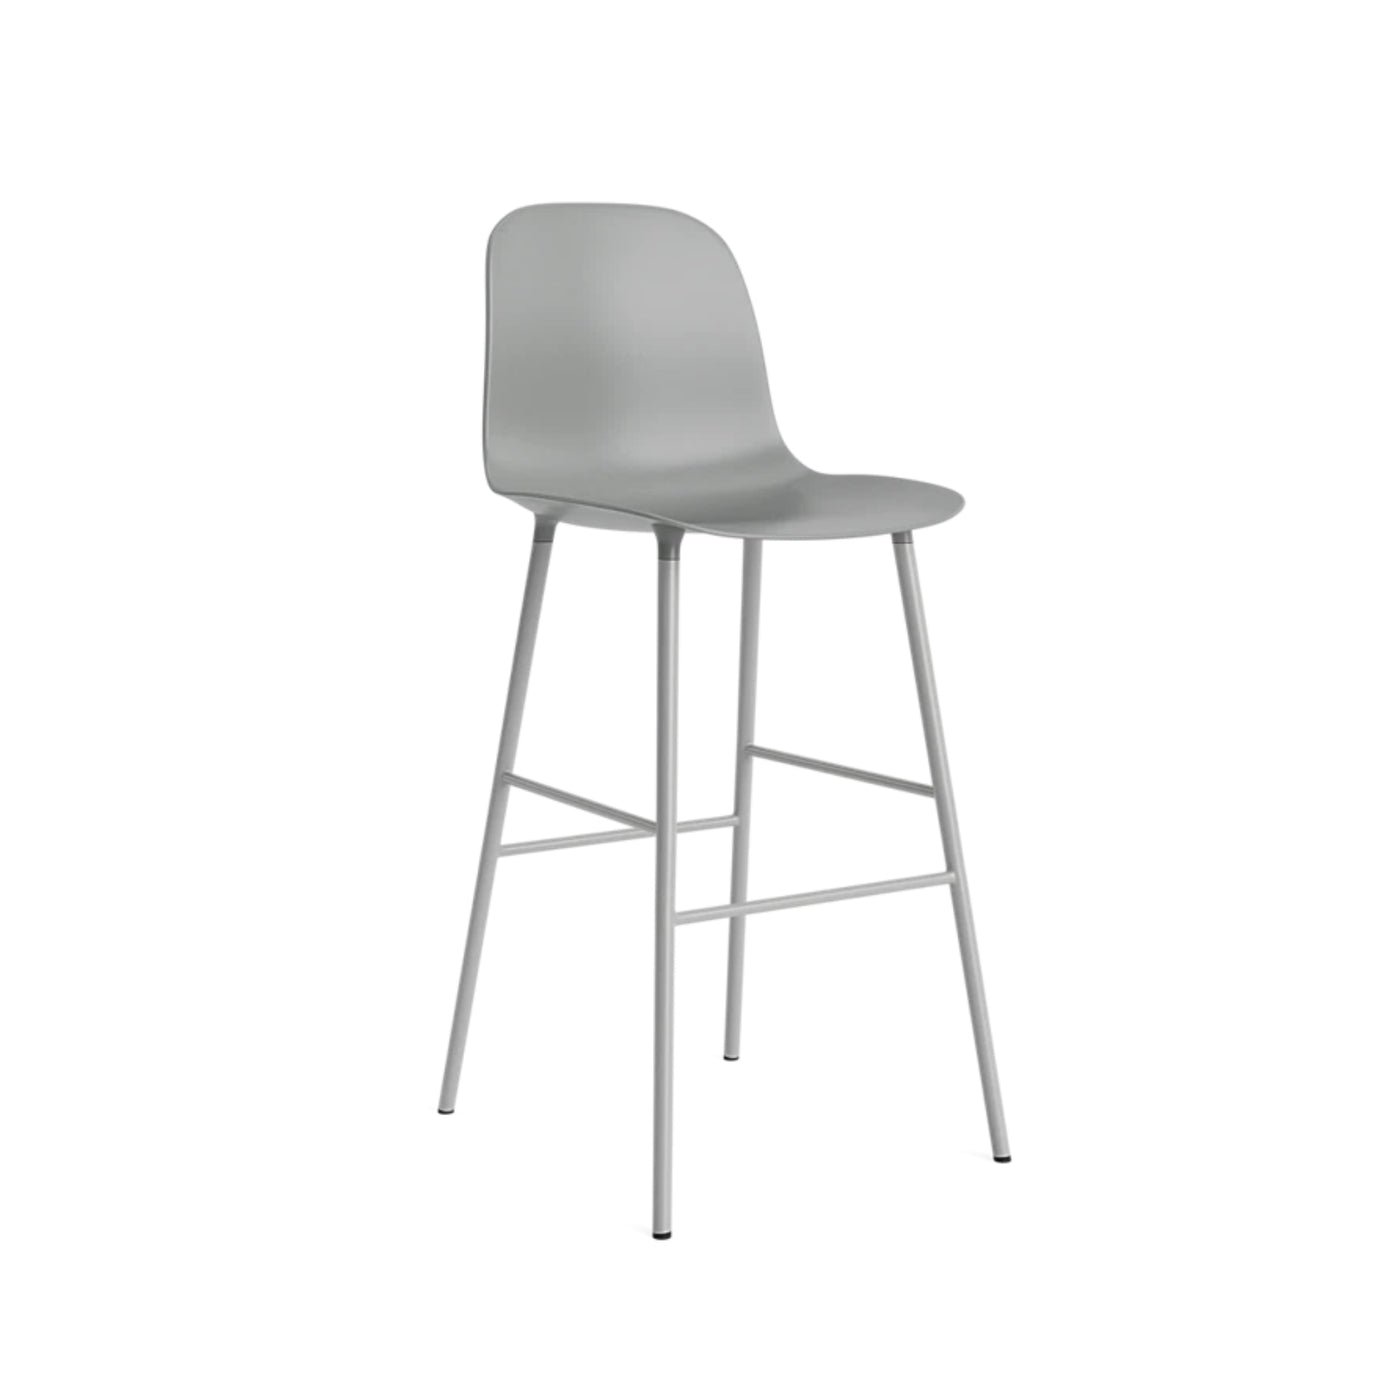 Normann Copenhagen Form Bar Chair Steel at someday designs. #colour_grey